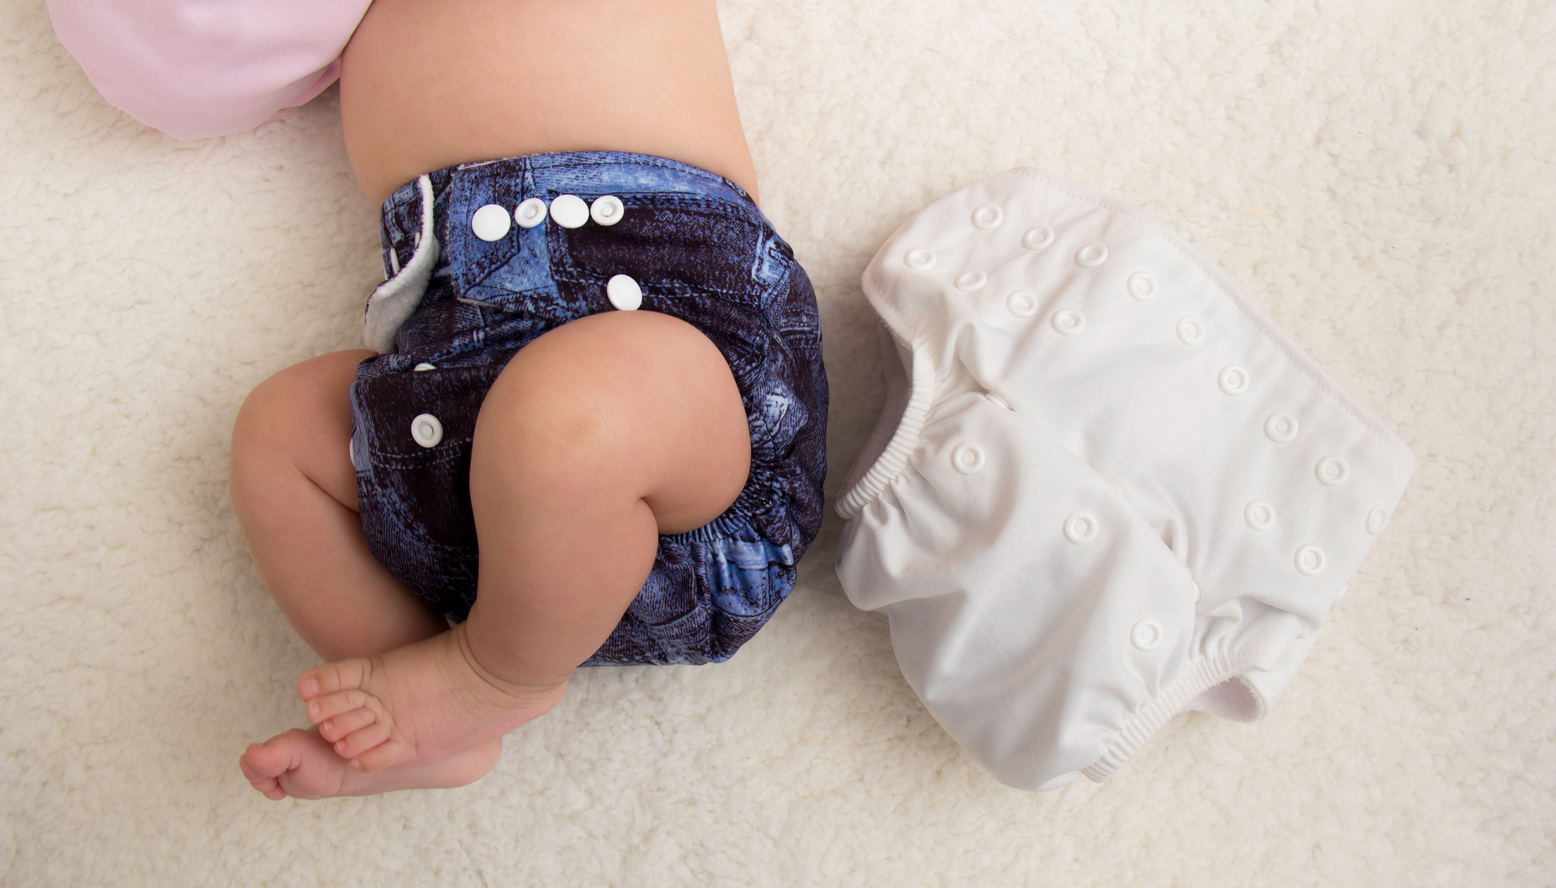 Baby lying down wearing cloth diaper